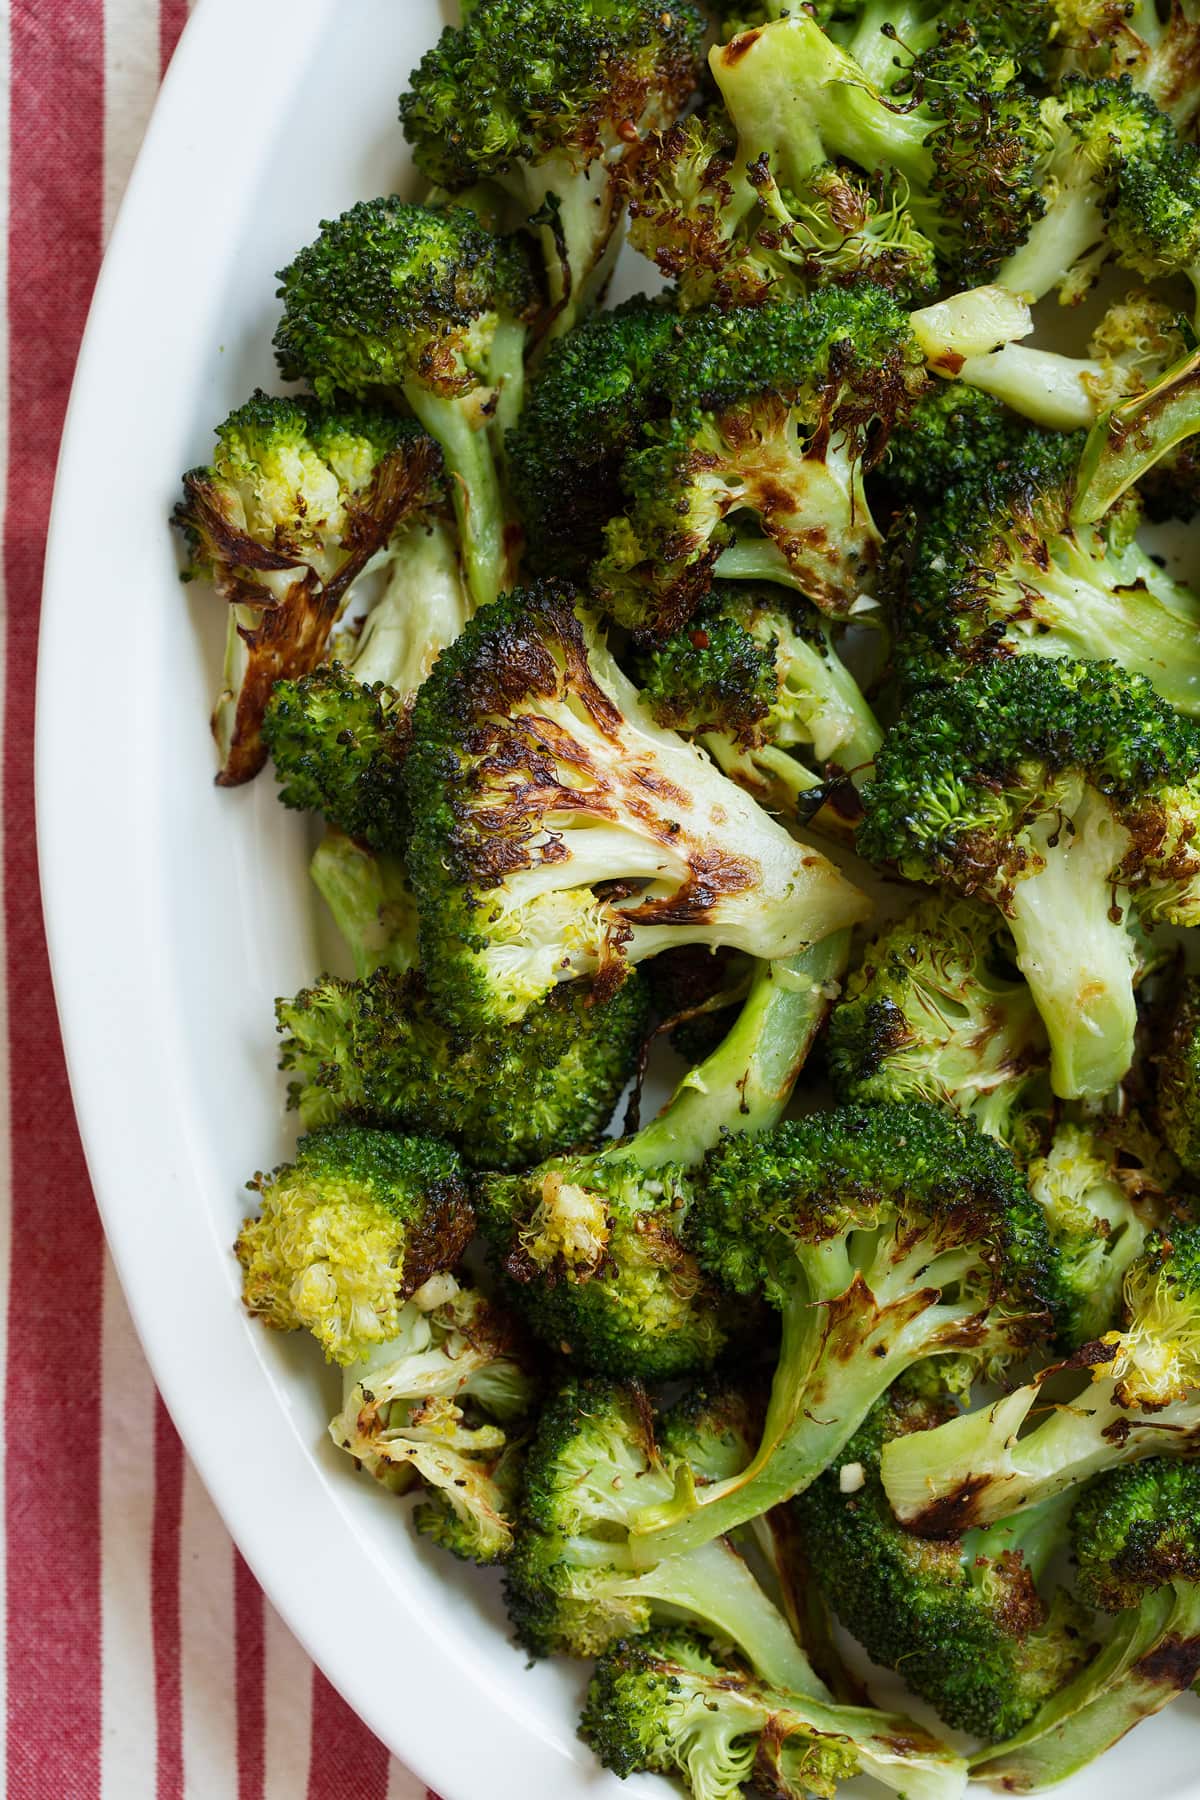 Close up image of roasted broccoli florets.